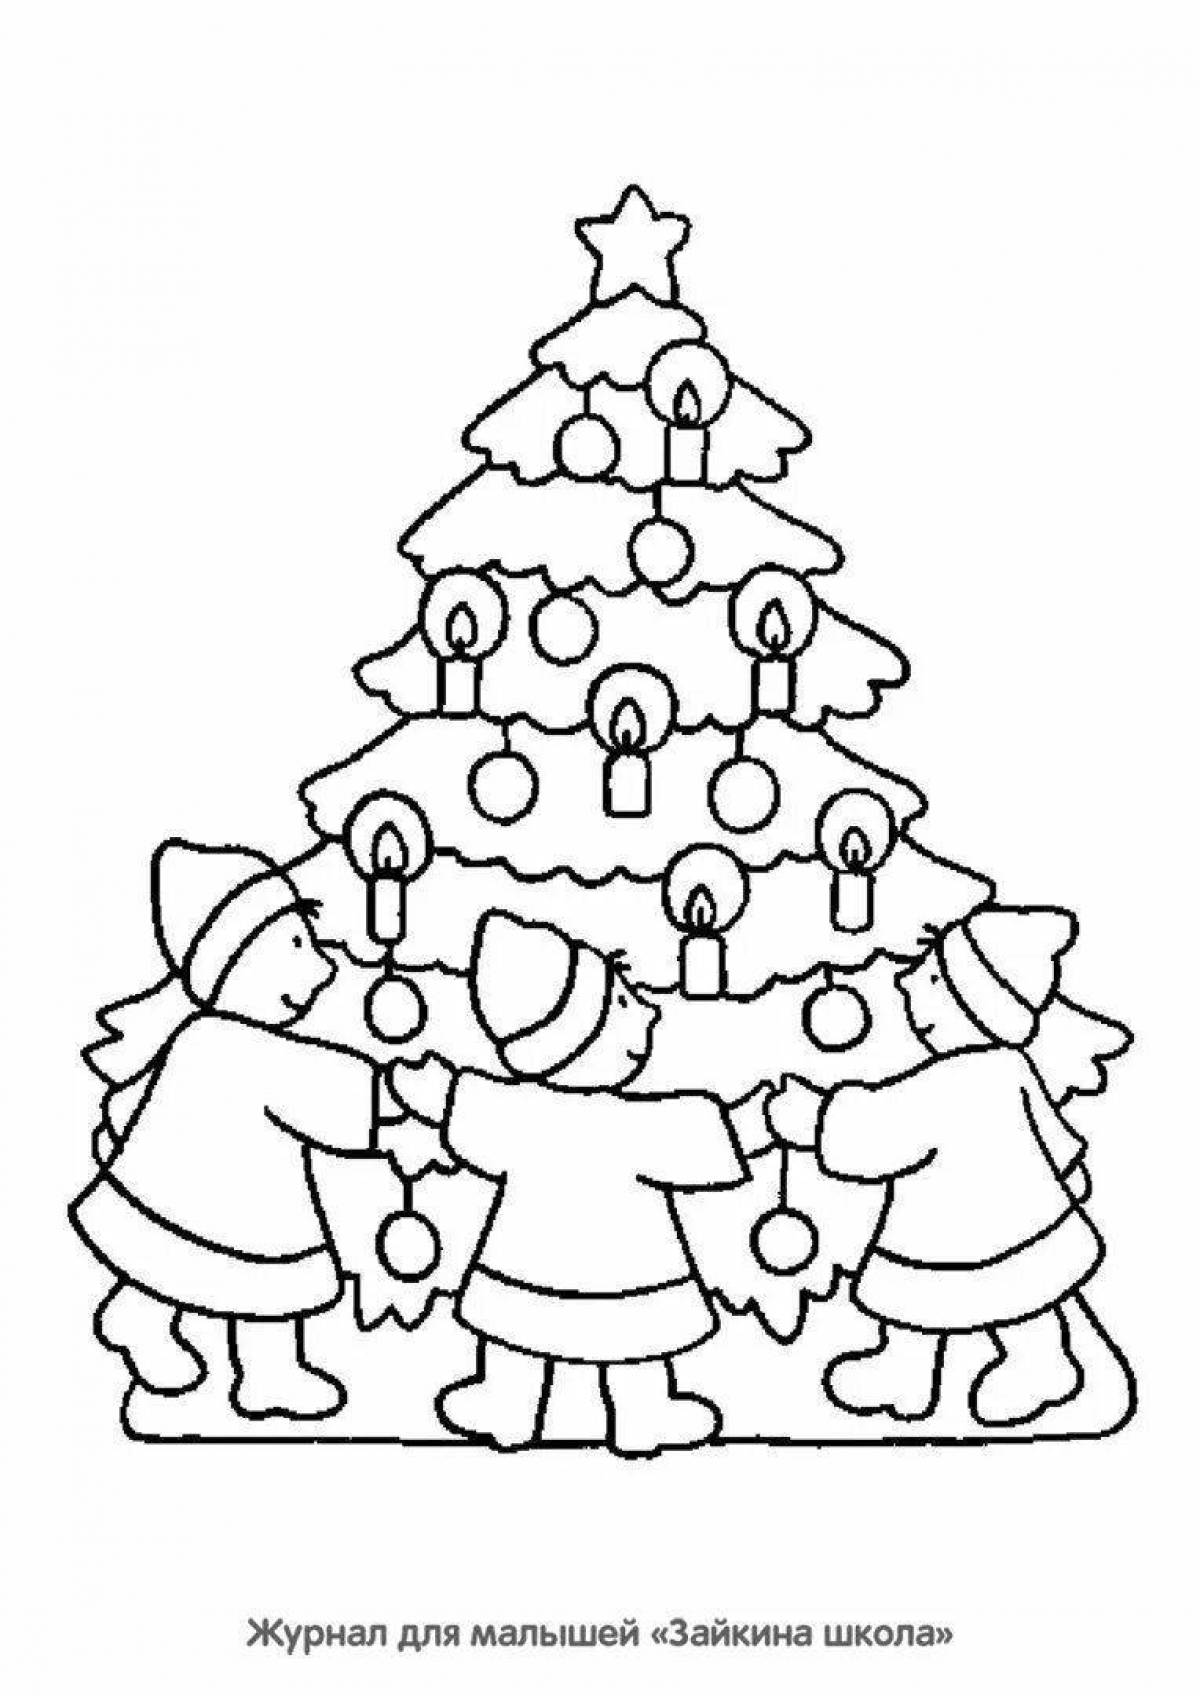 Coloring book festive children's tree